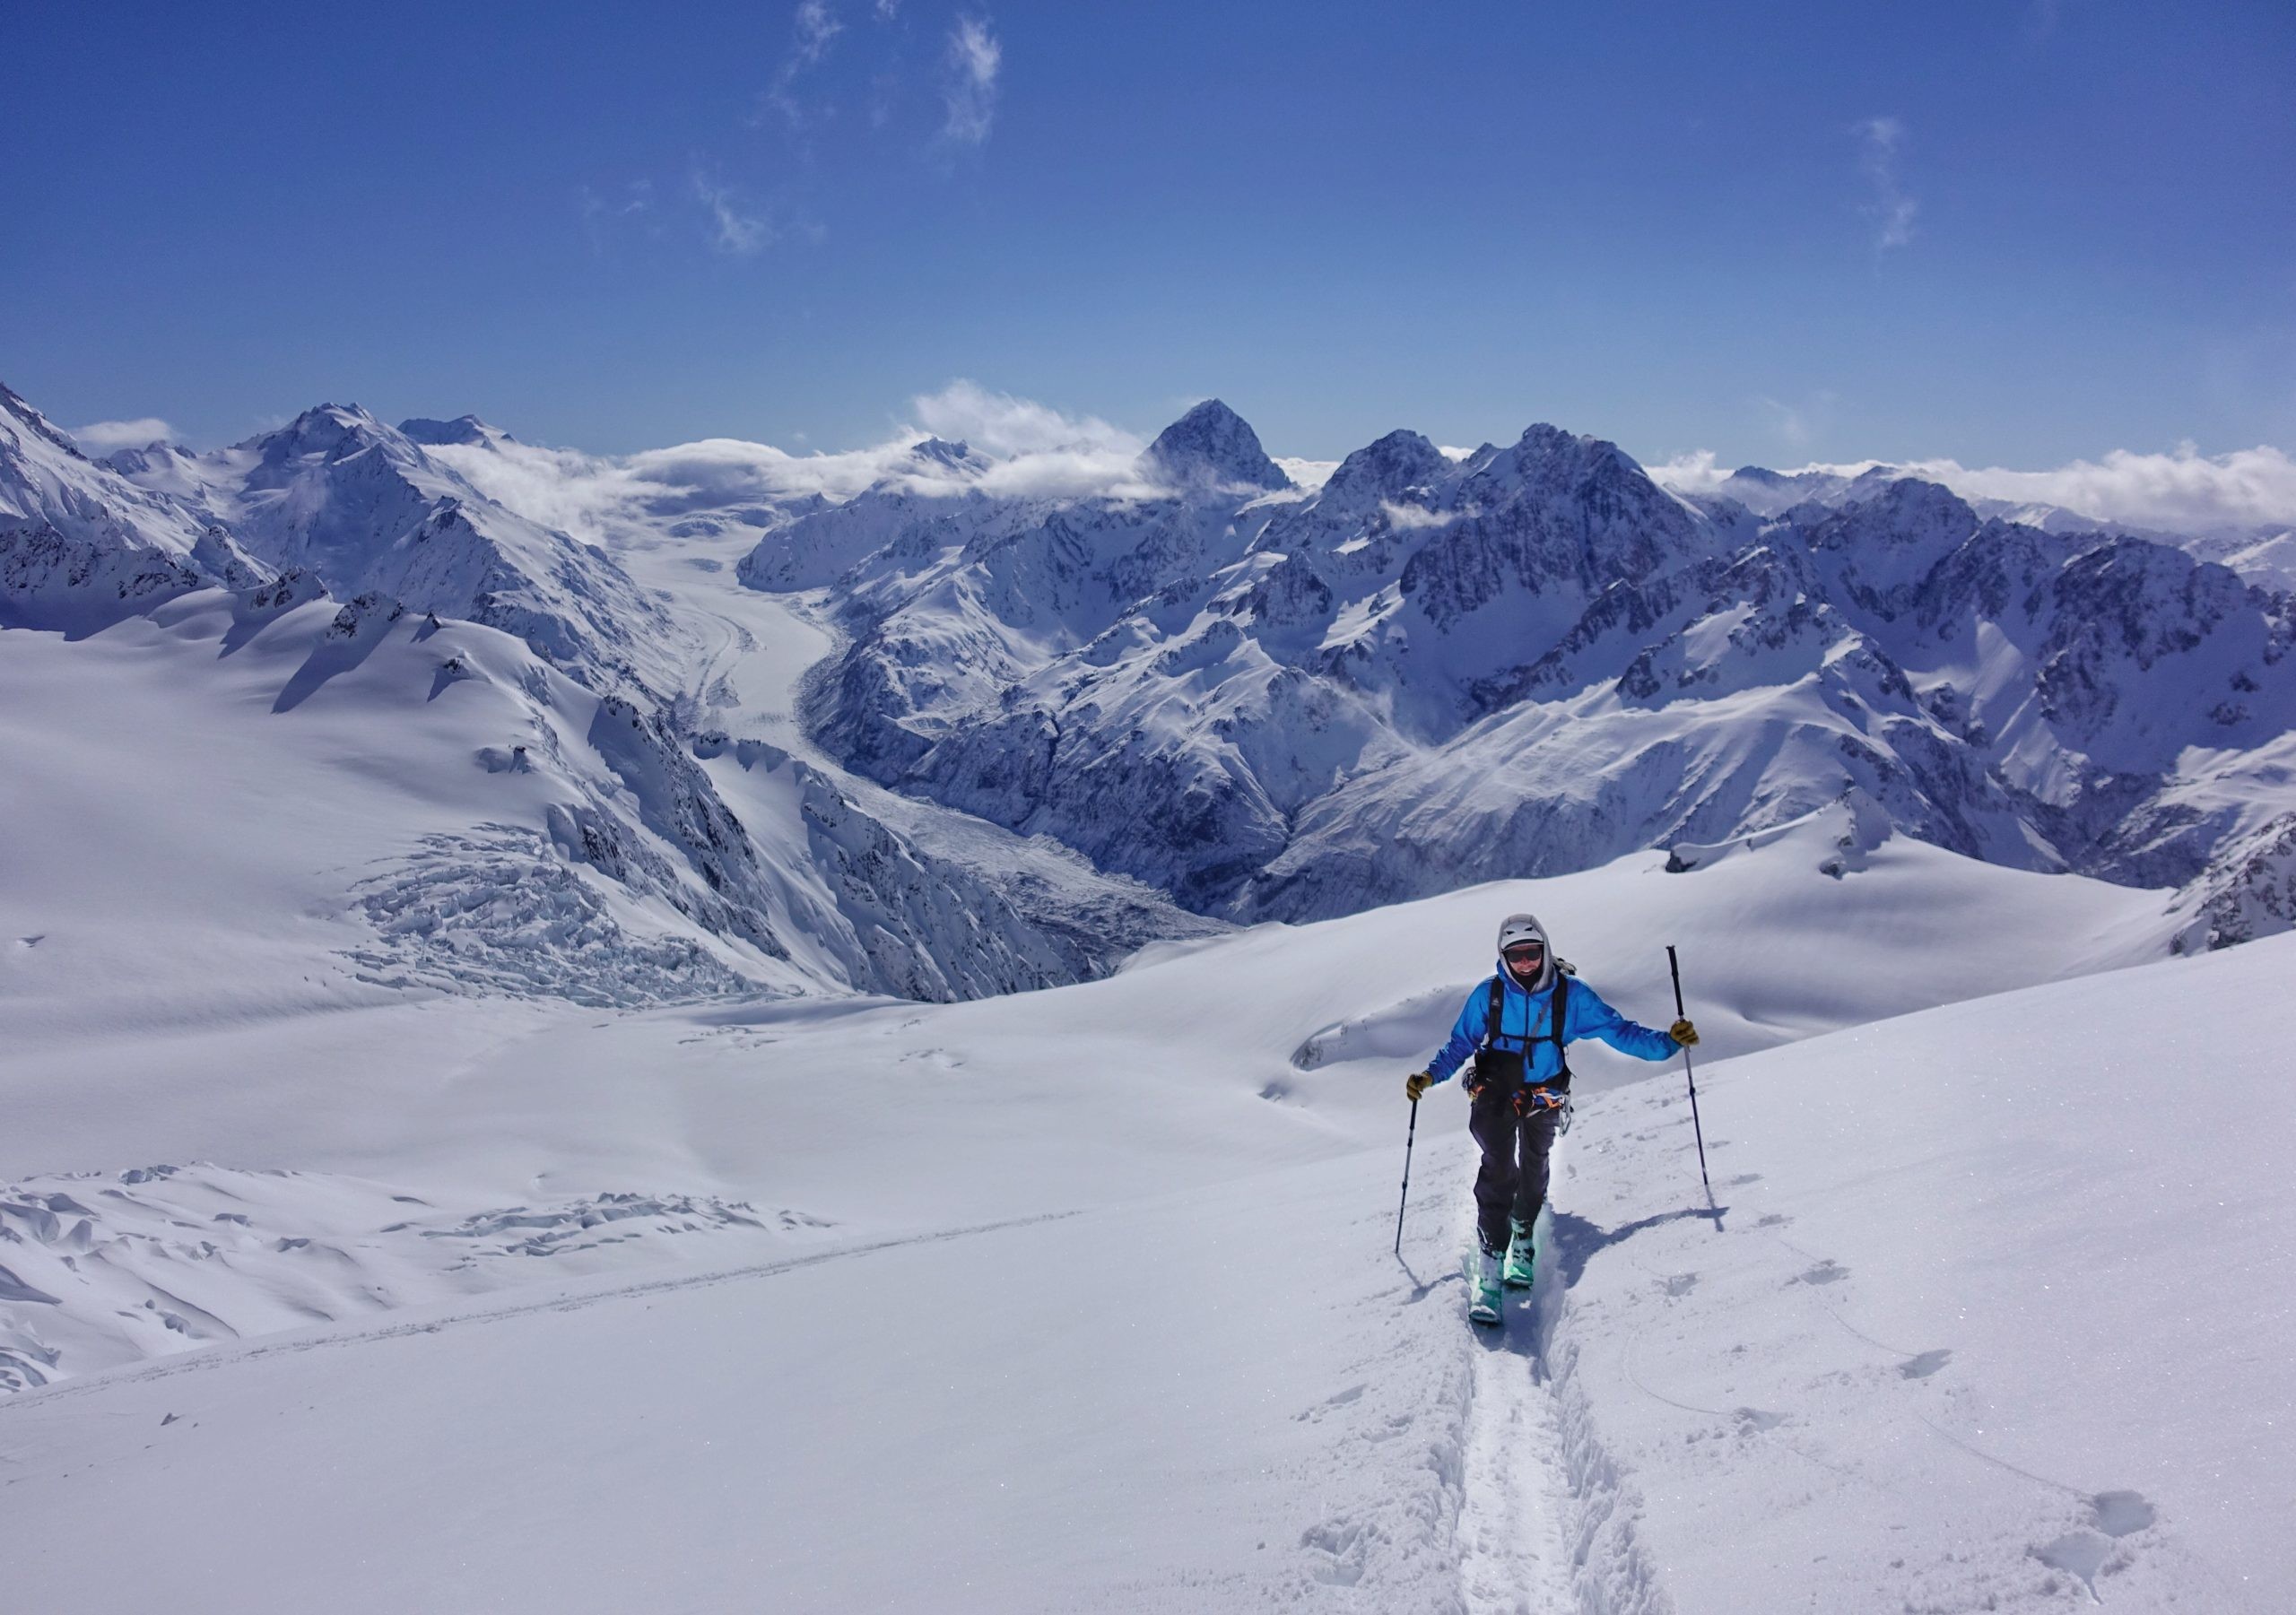 Ski Touring and Ski Mountaineering around the world